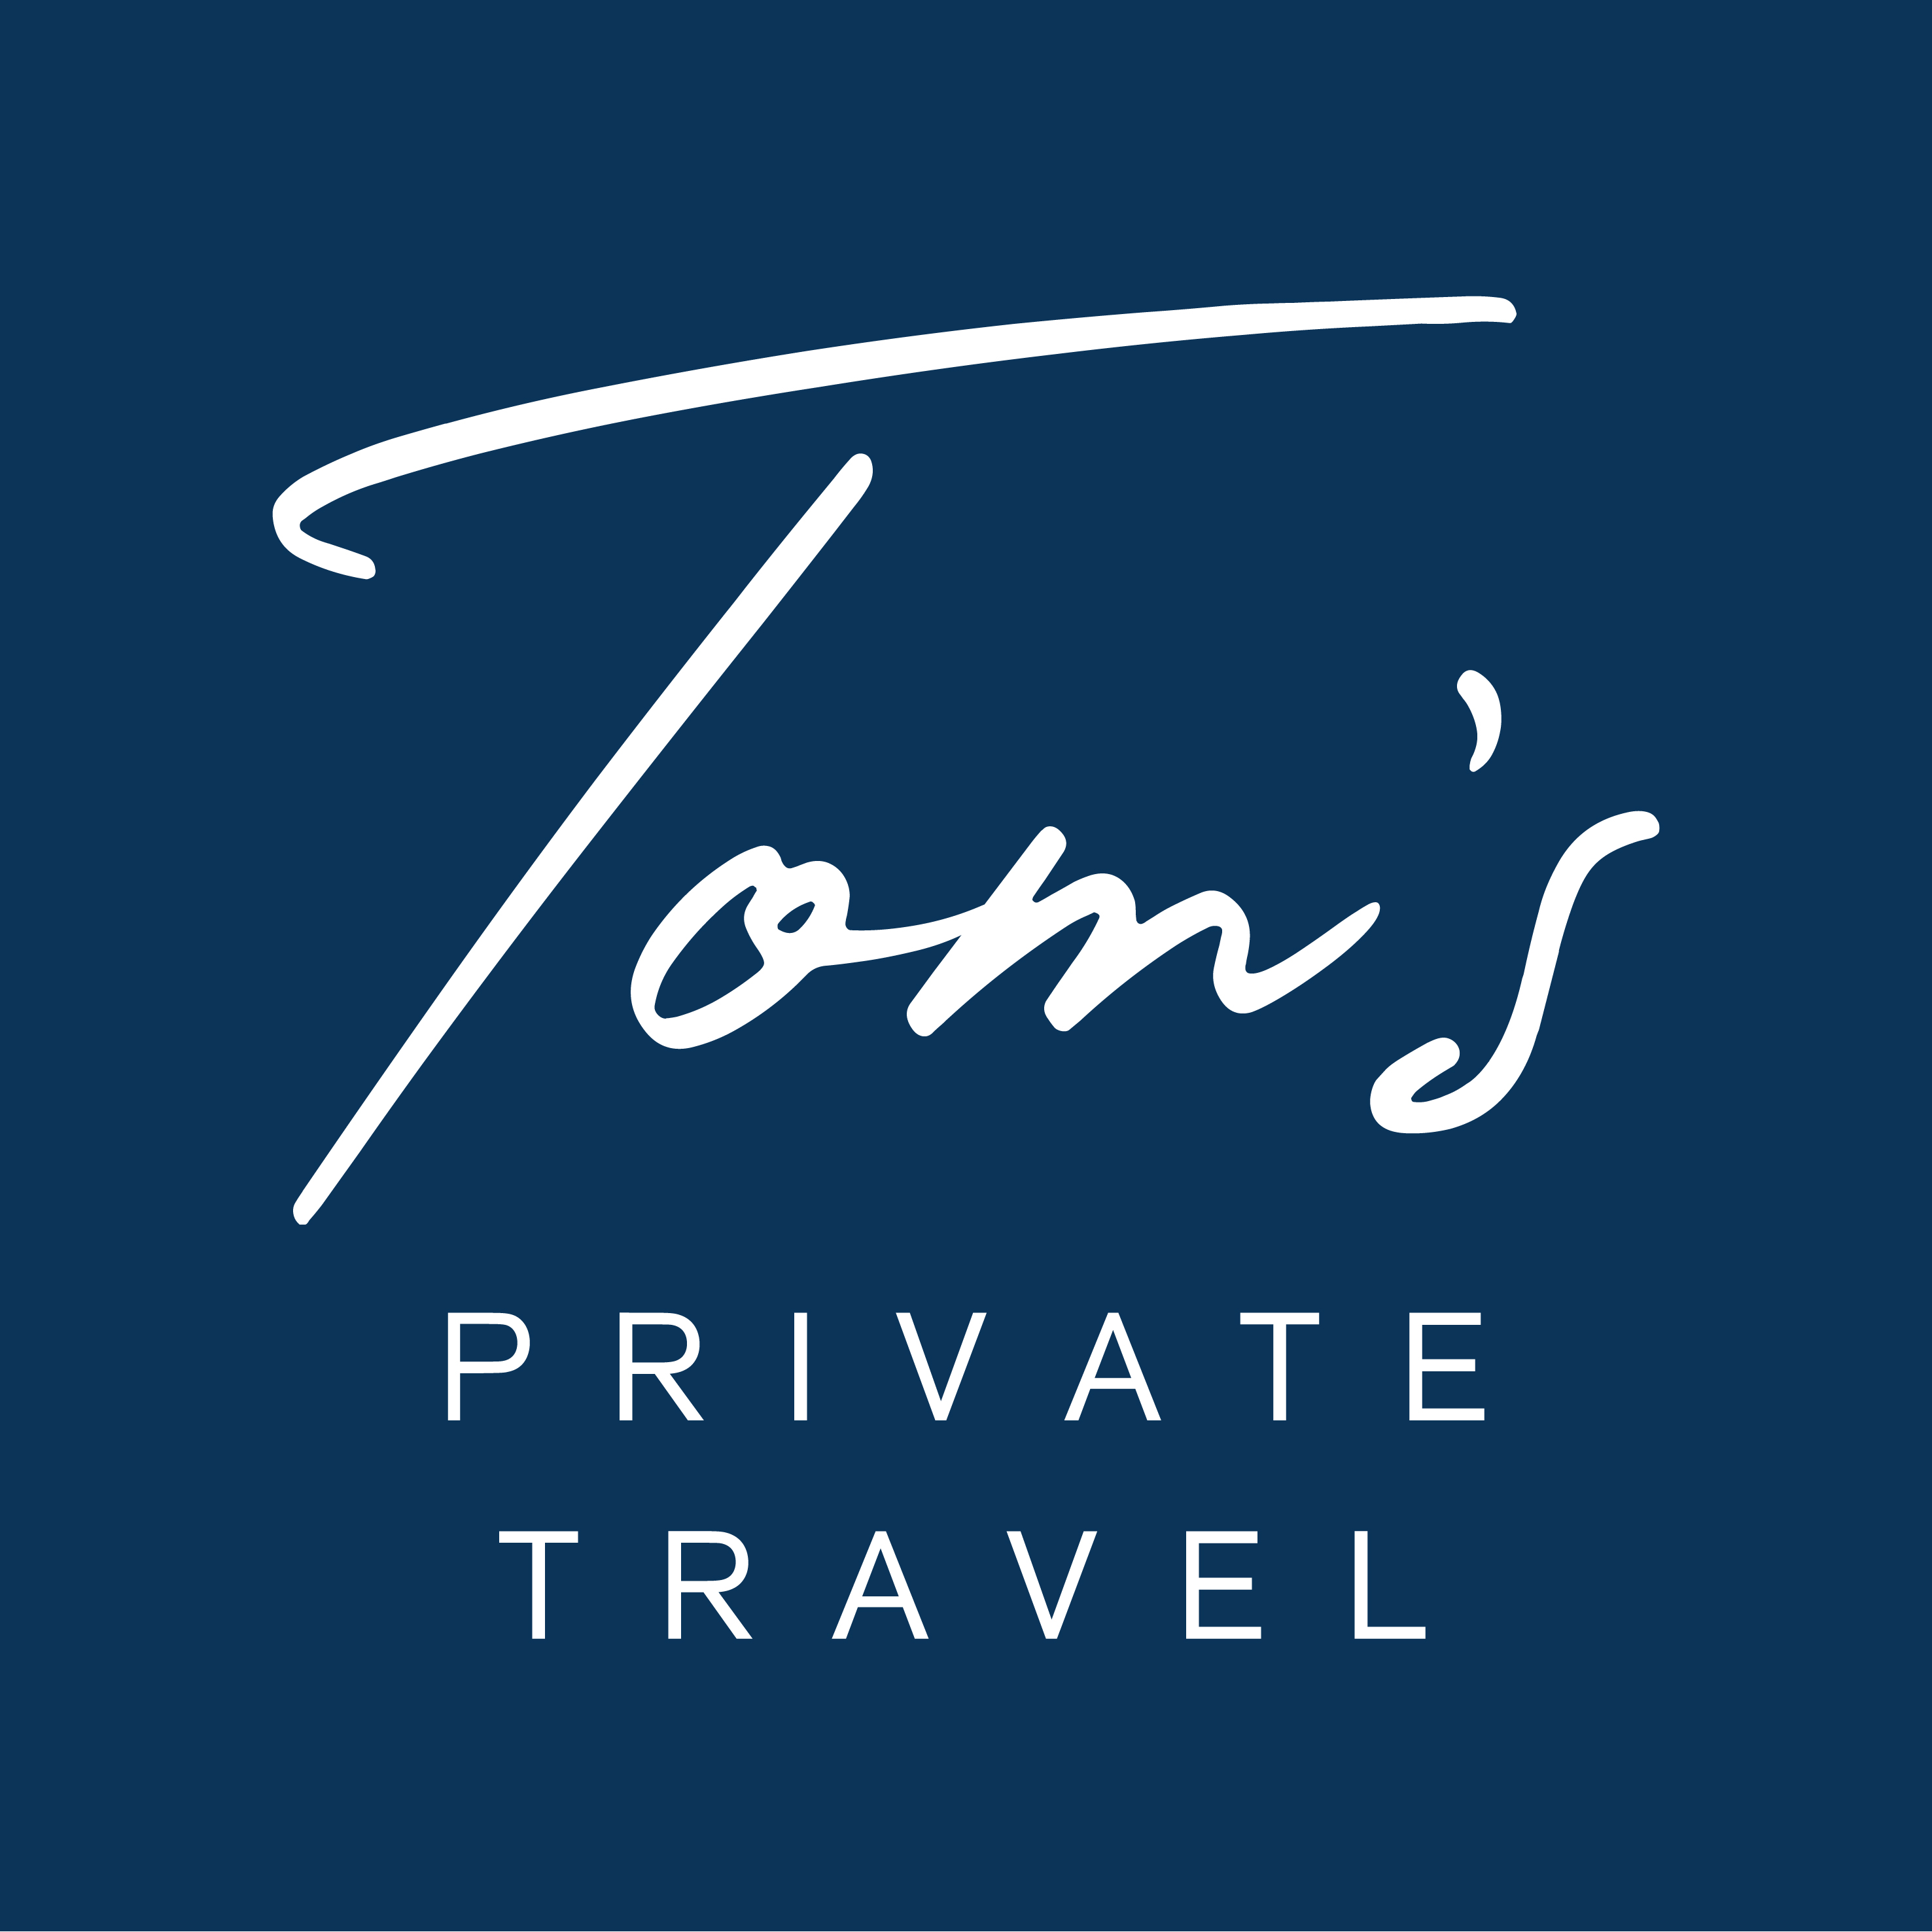 toms privat travel